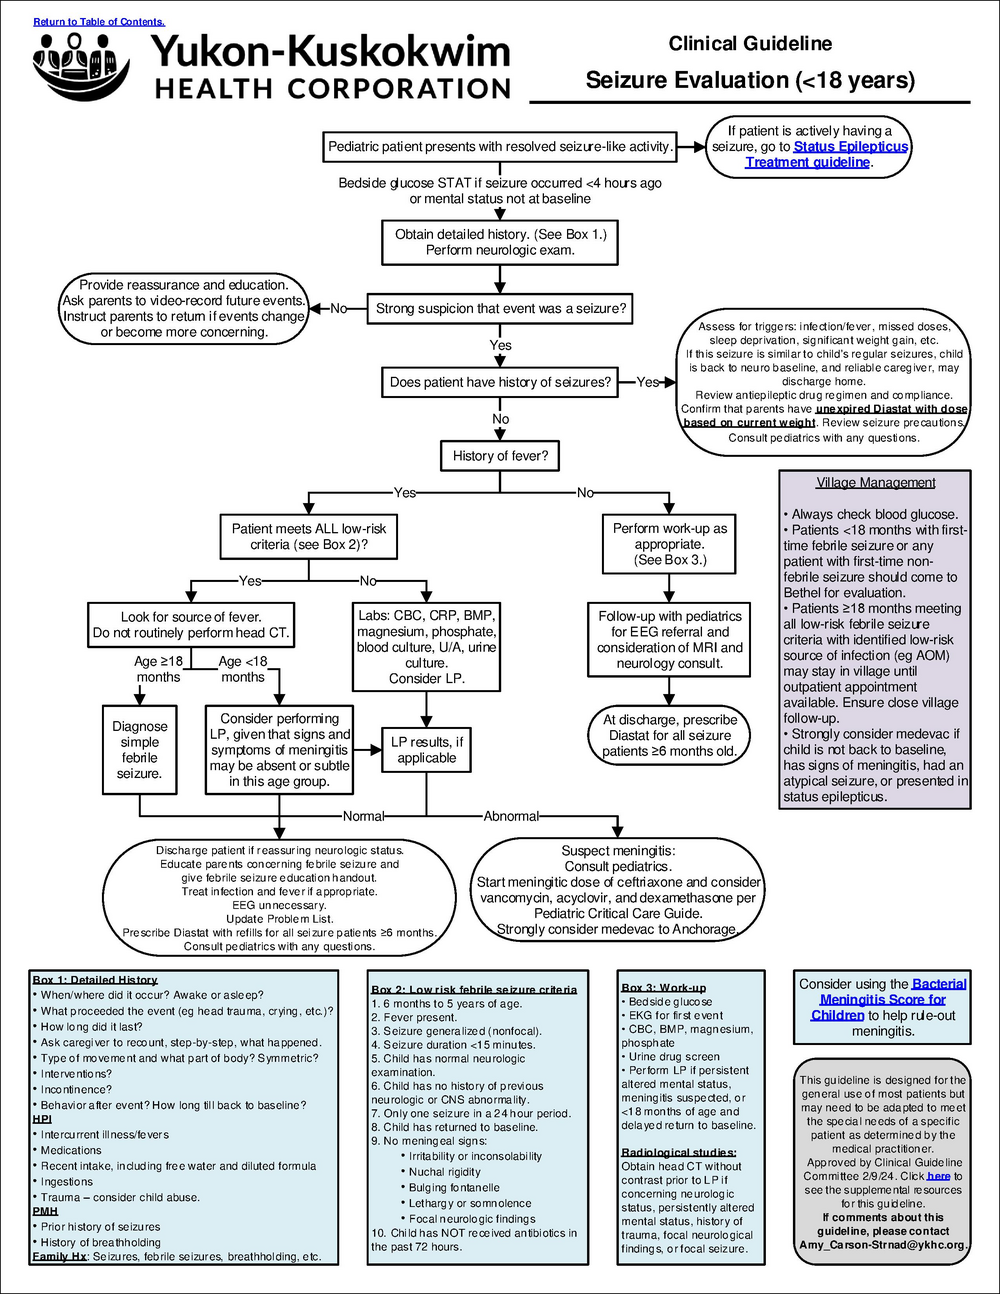 Seizure evaluation peds.pdf